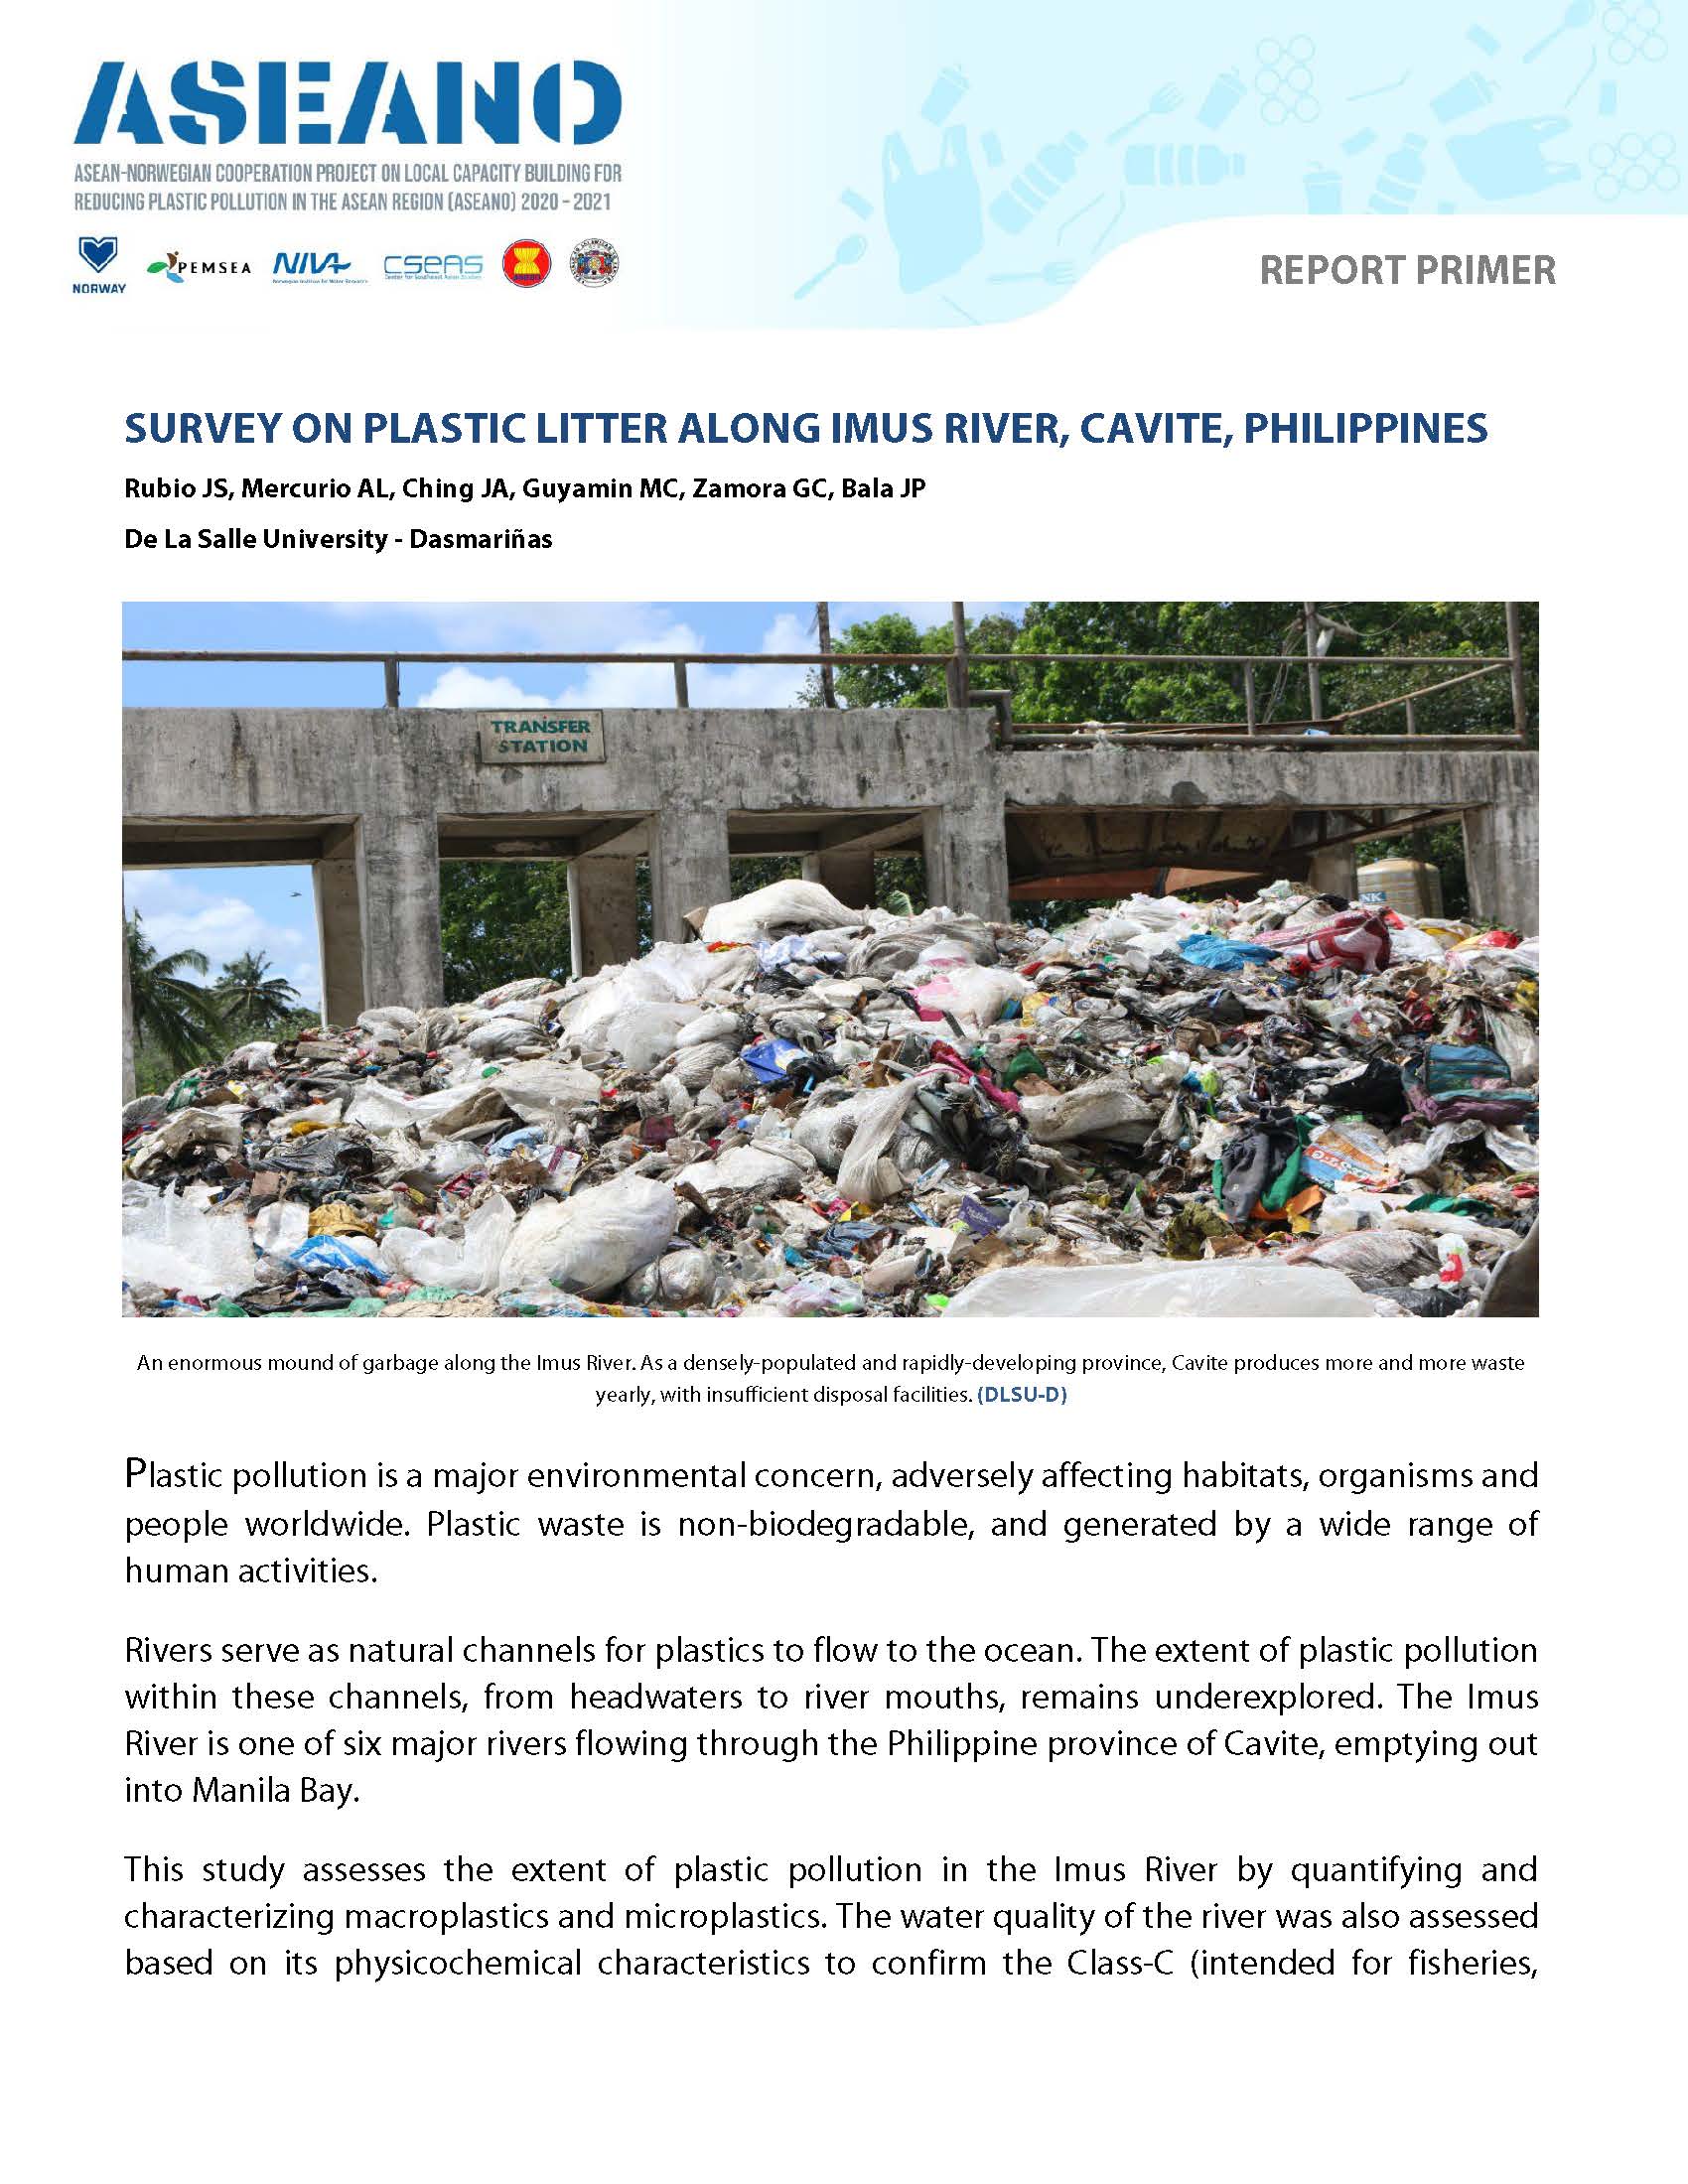 ASEANO Subproject 2 Primer - Survey on Plastic Litter